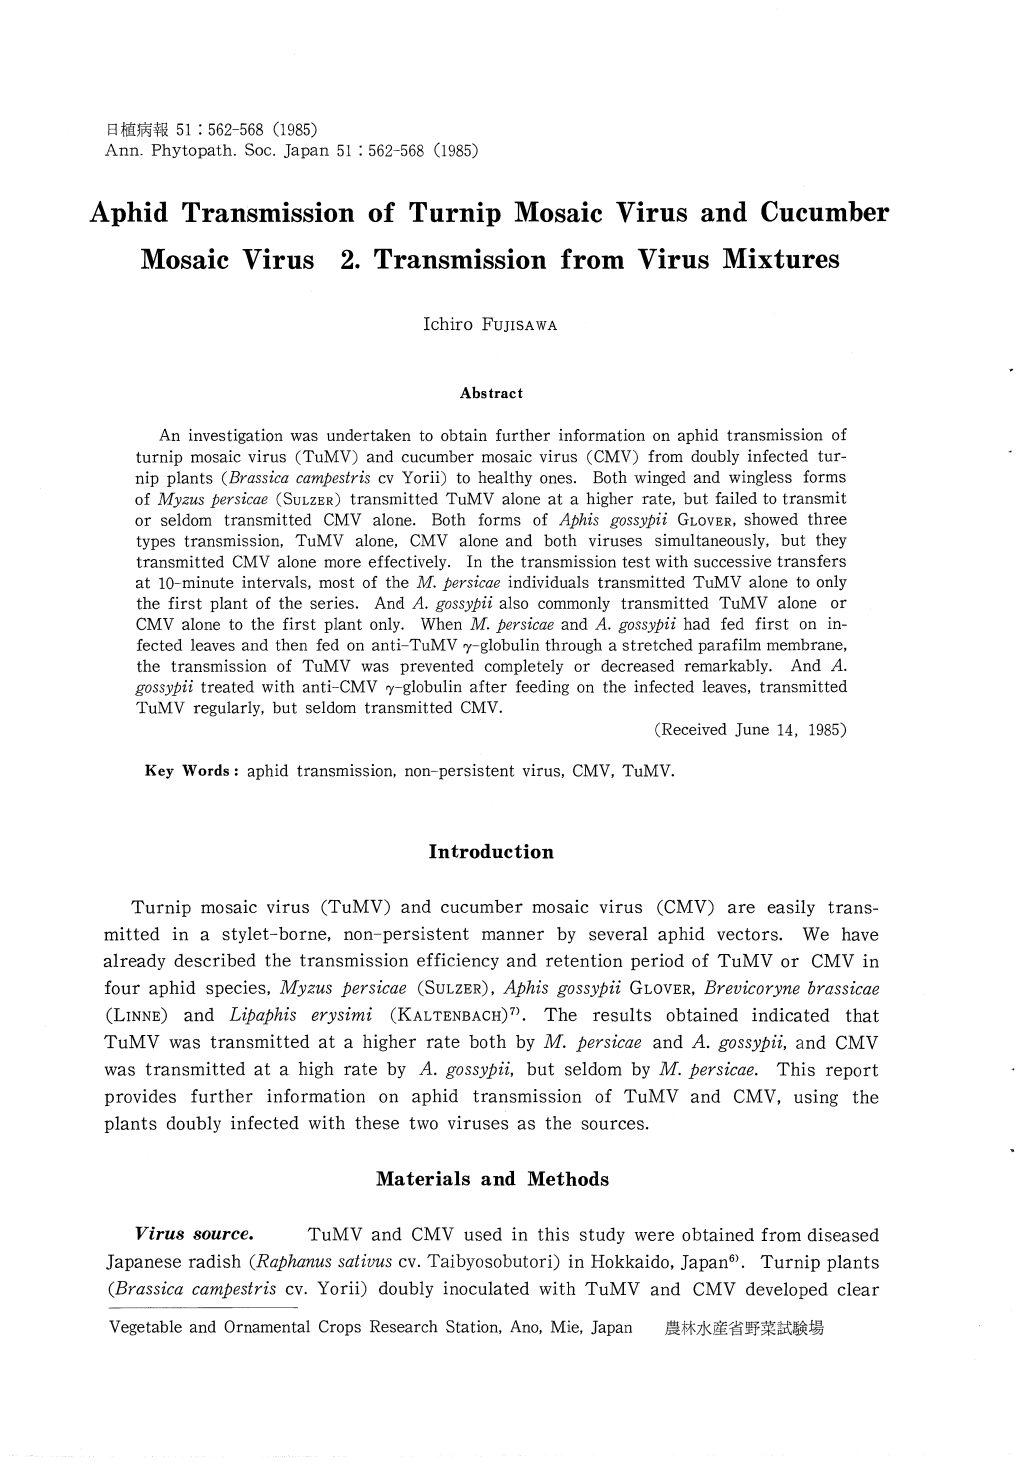 Aphid Transmission of Turnip Mosaic Virus and Cucumber